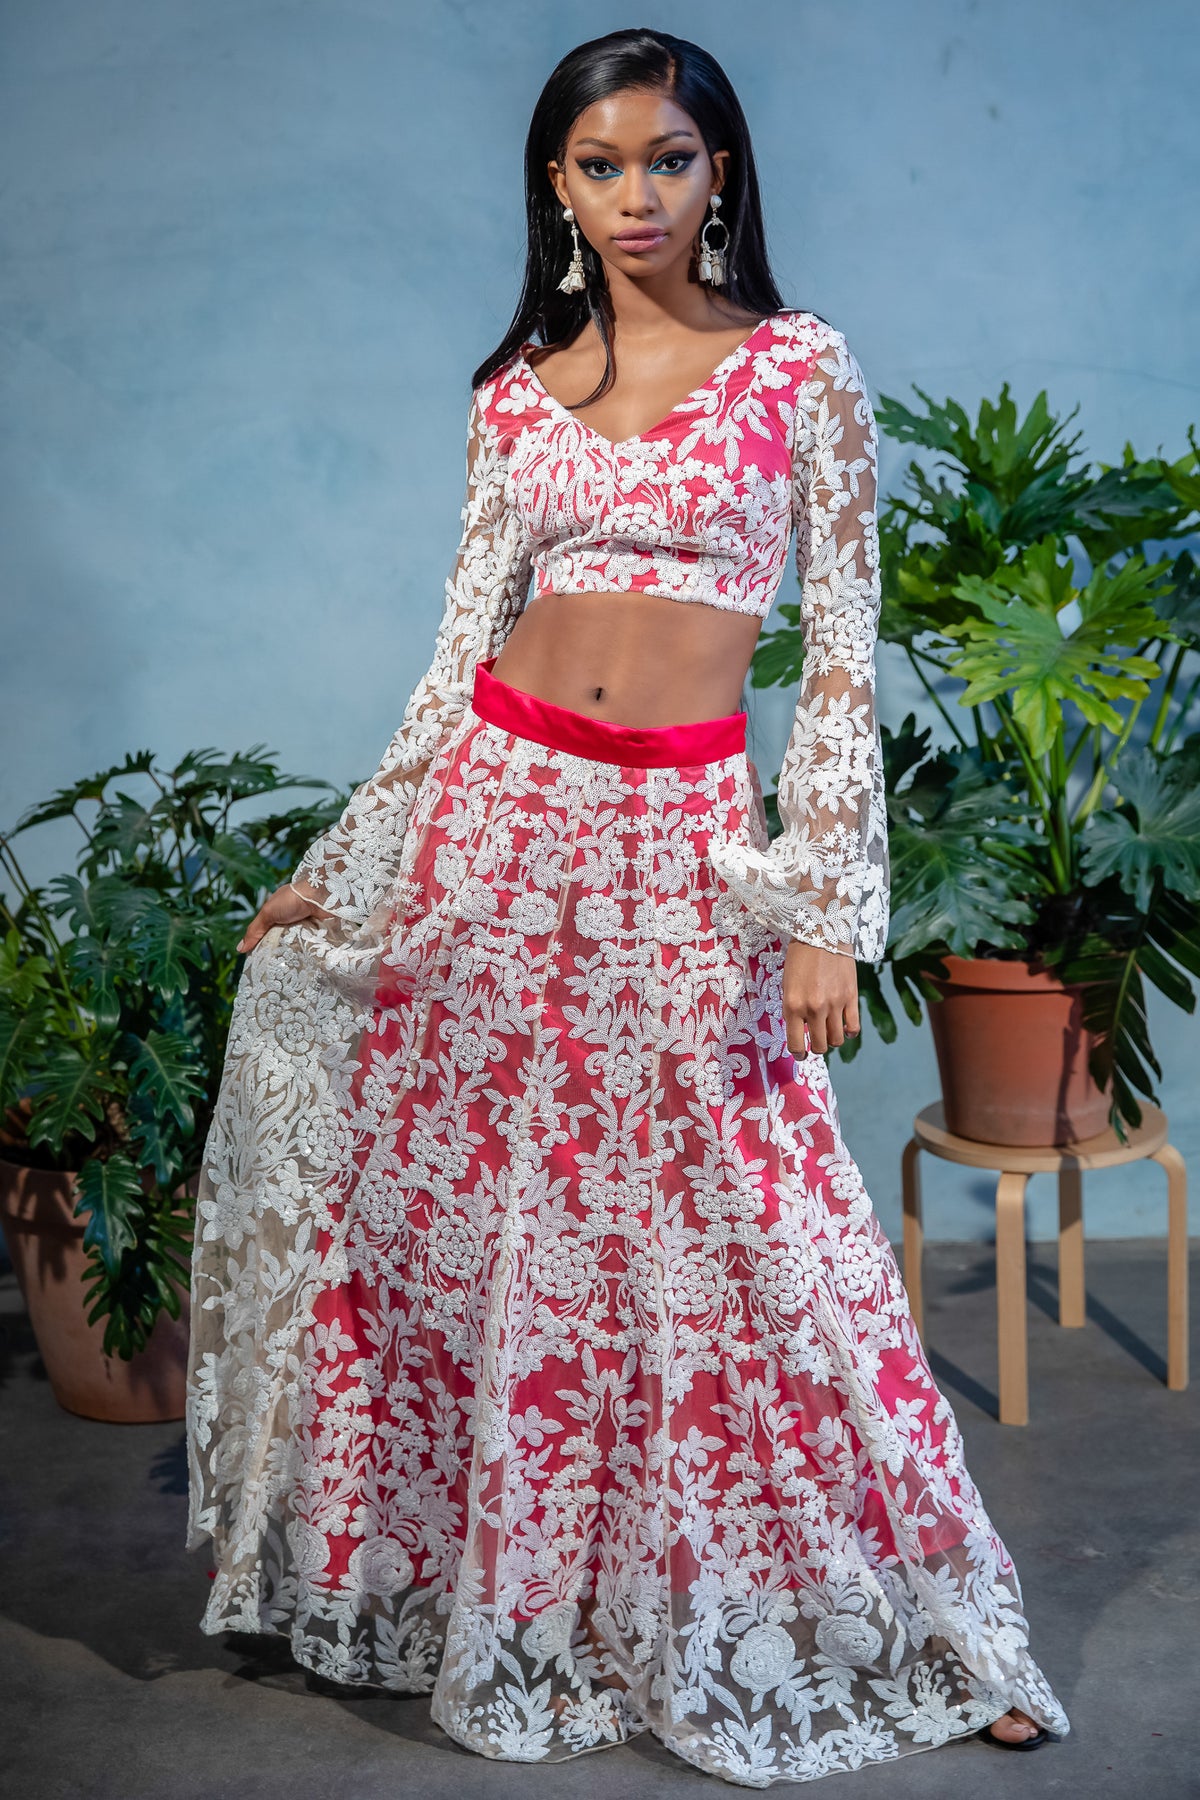 ROSE White Sequin Lengha Top - Front View - Harleen Kaur Womenswear - Sample Sale